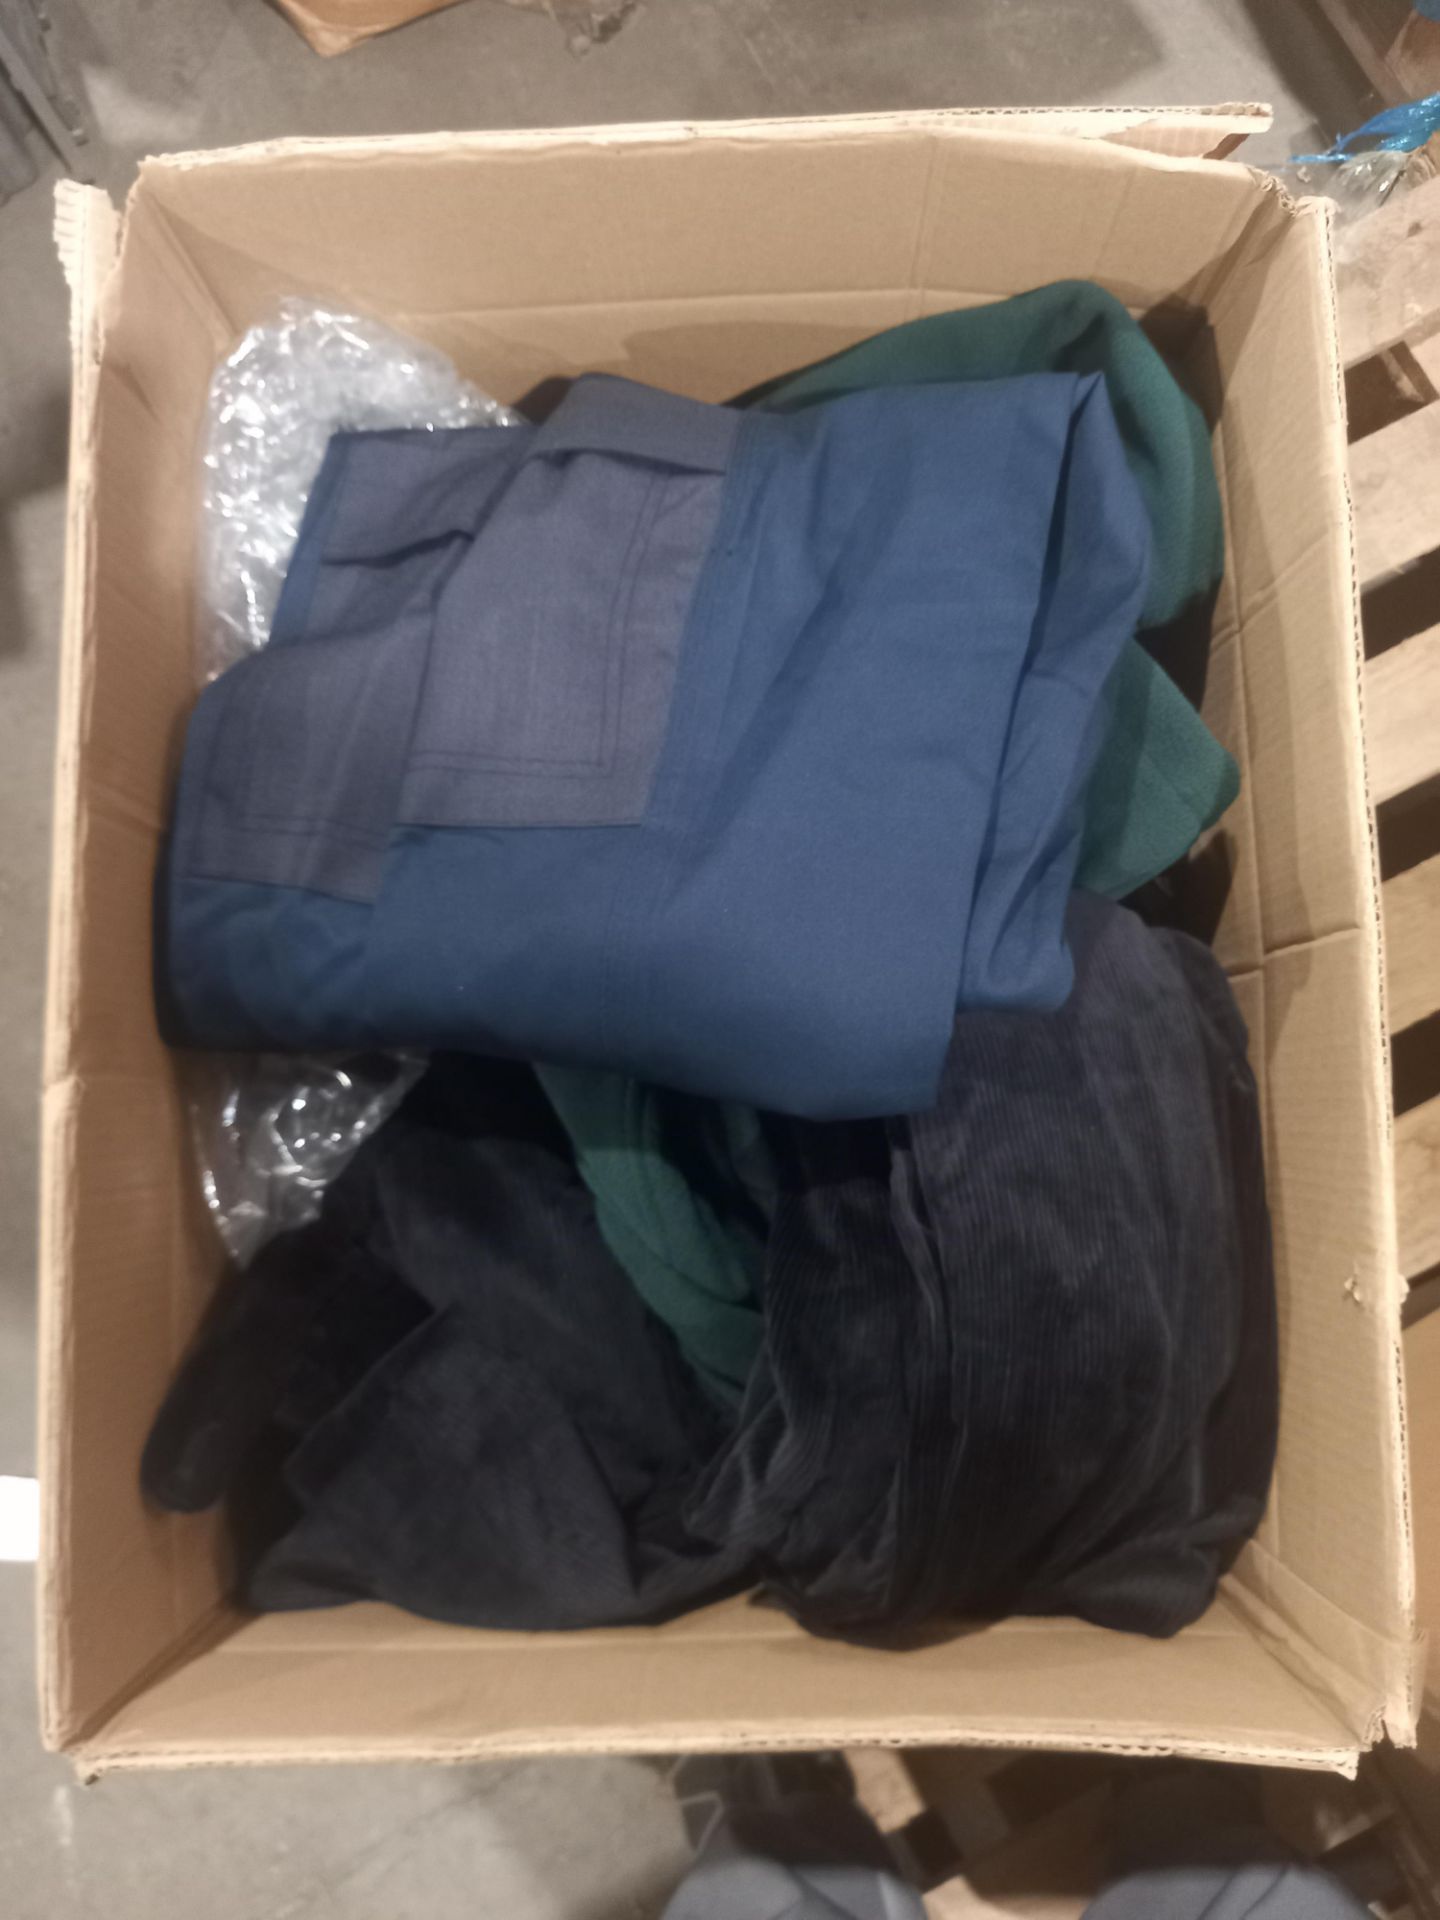 Mixed Lot of Workwear - 8 x M Jackets, 6 x XL Jackets, Fleece Jumpers, Socks - Image 5 of 7